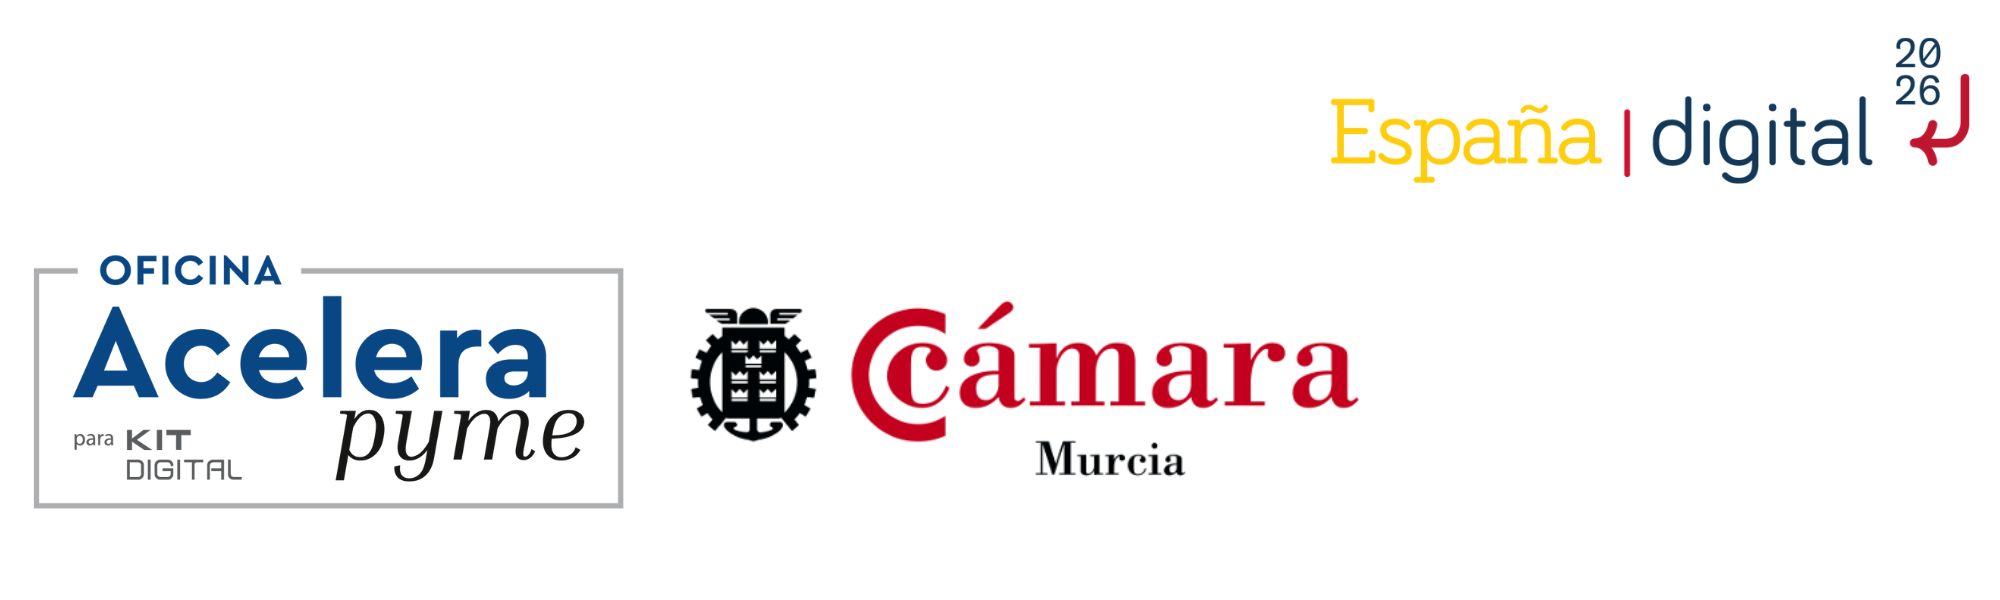 Oficina Acelera Pyme para Kit Digital | España Digital | Cámara de Comercio de Murcia